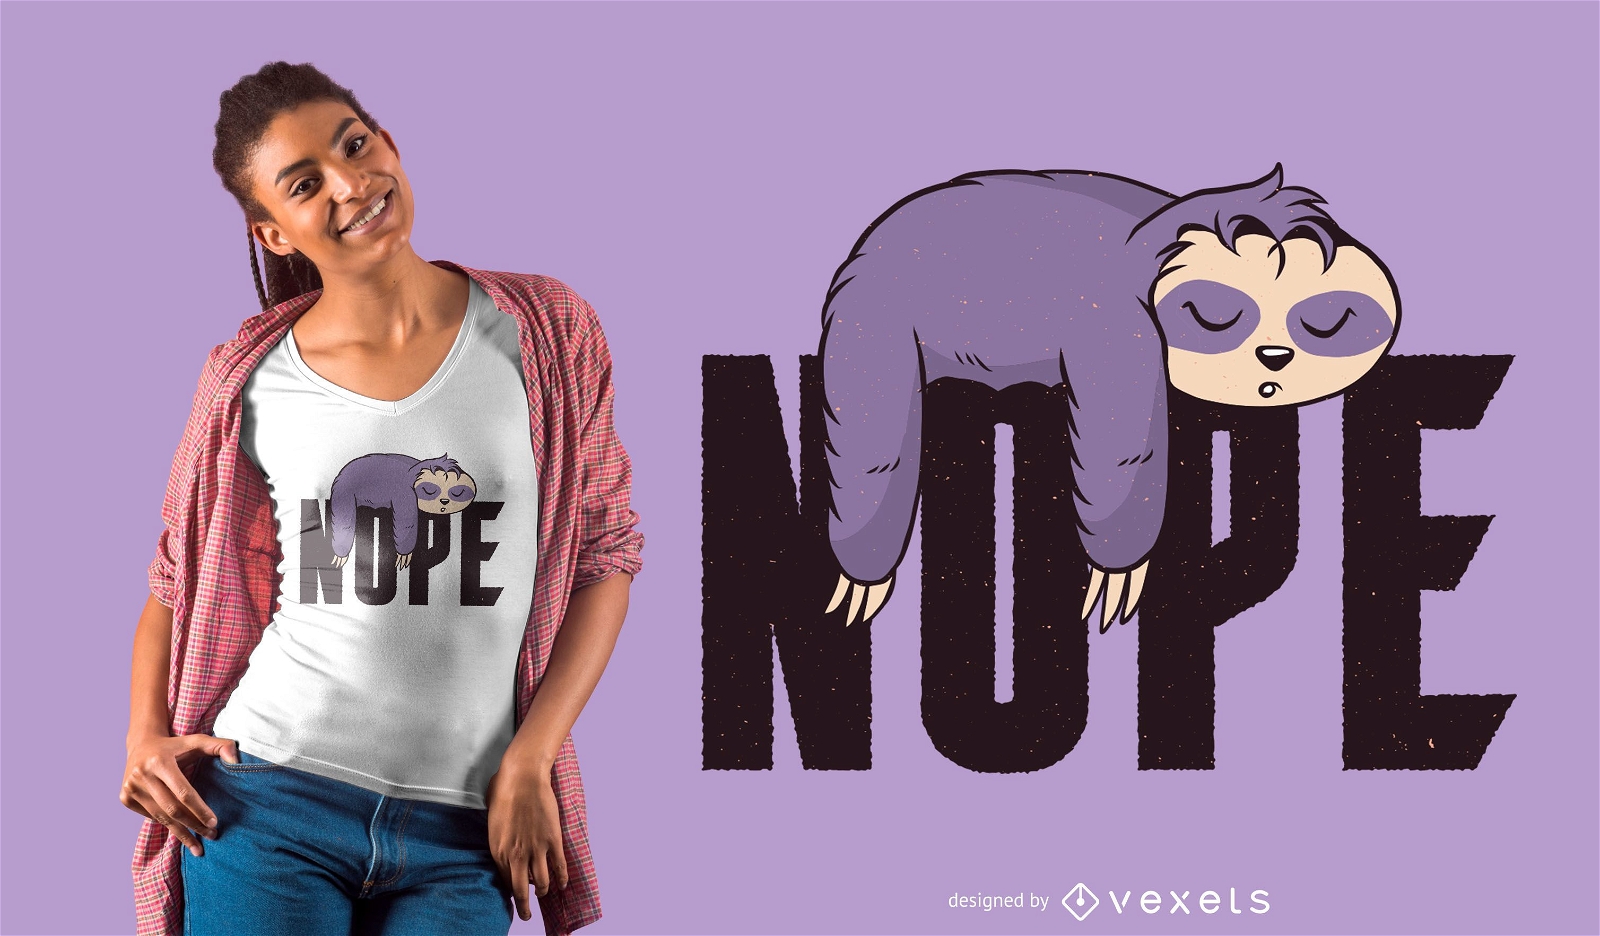 Nope sloth t-shirt design